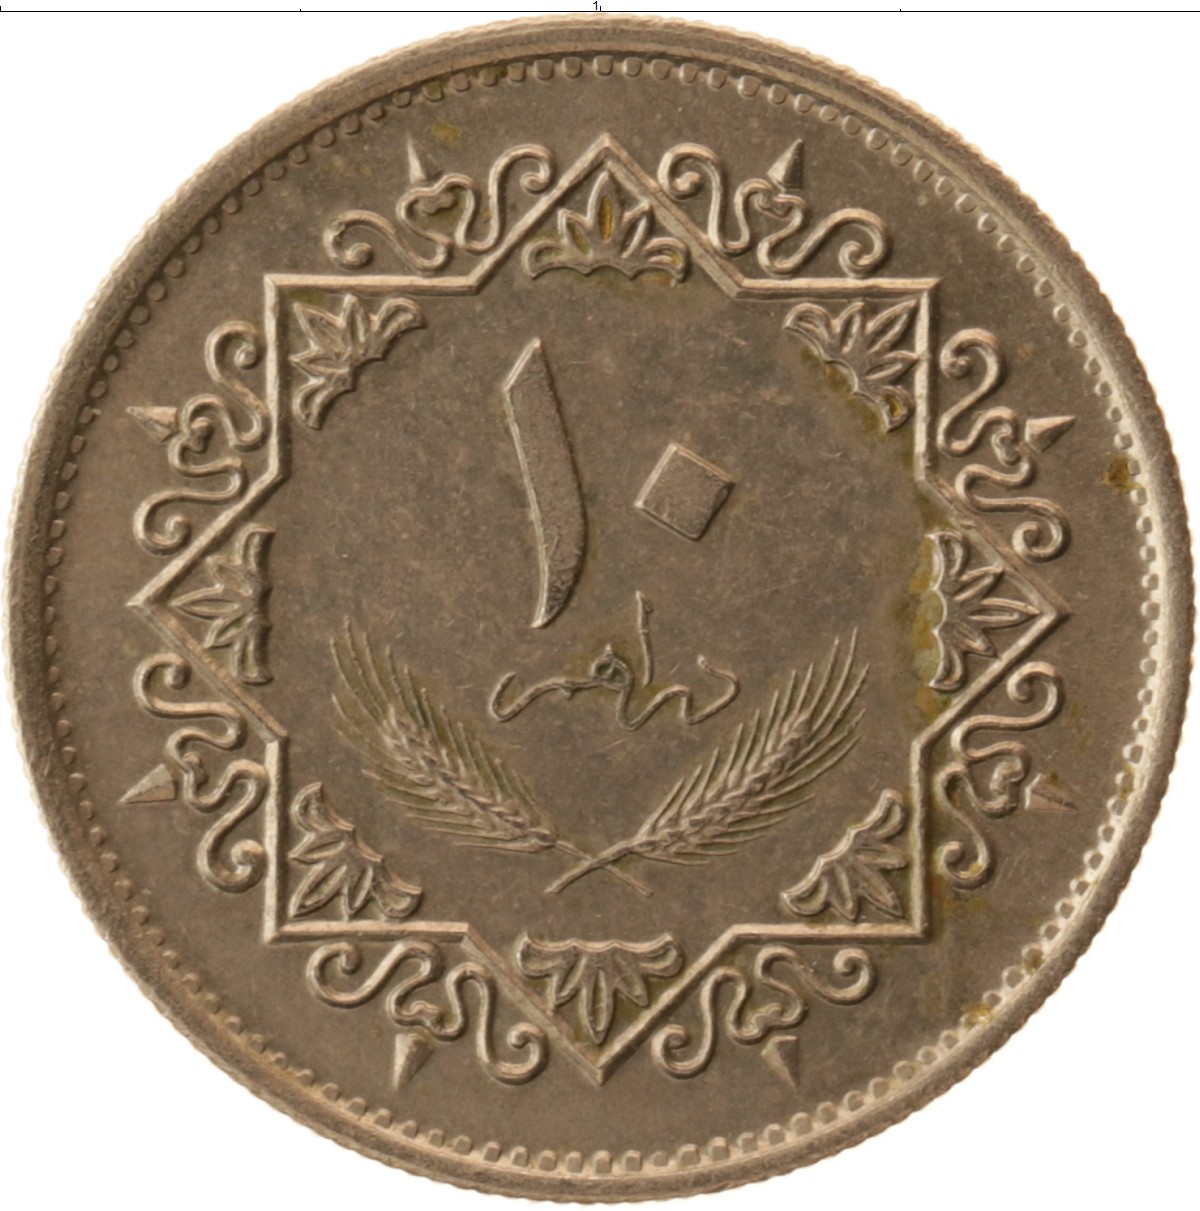 550 дирхам. Ливия 100 дирхамов 2014. Монеты Ливия. Монета Ливии 100 дирхам. Монета Ливия 10.